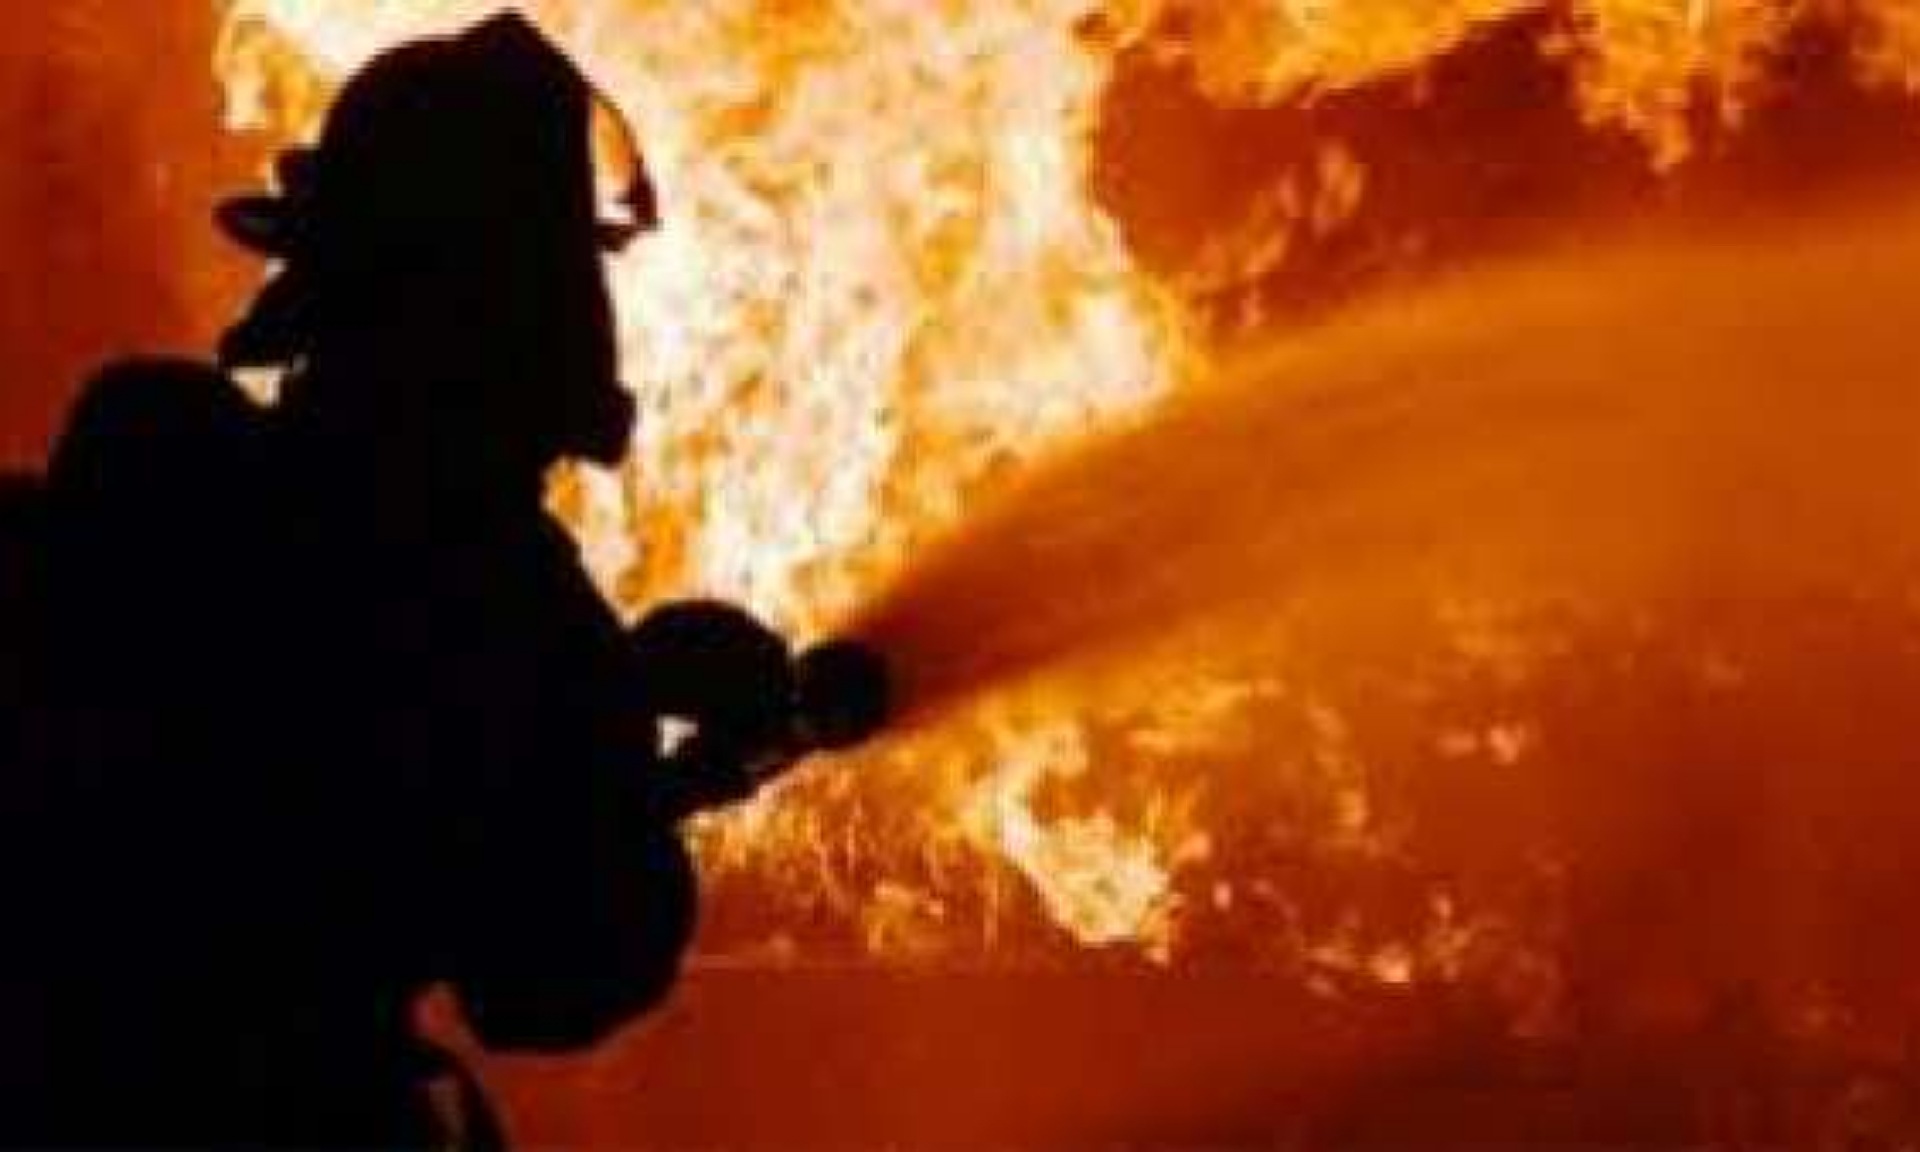 DPKP Catat 173 Kejadian Kebakaran Lahan di Pekanbaru